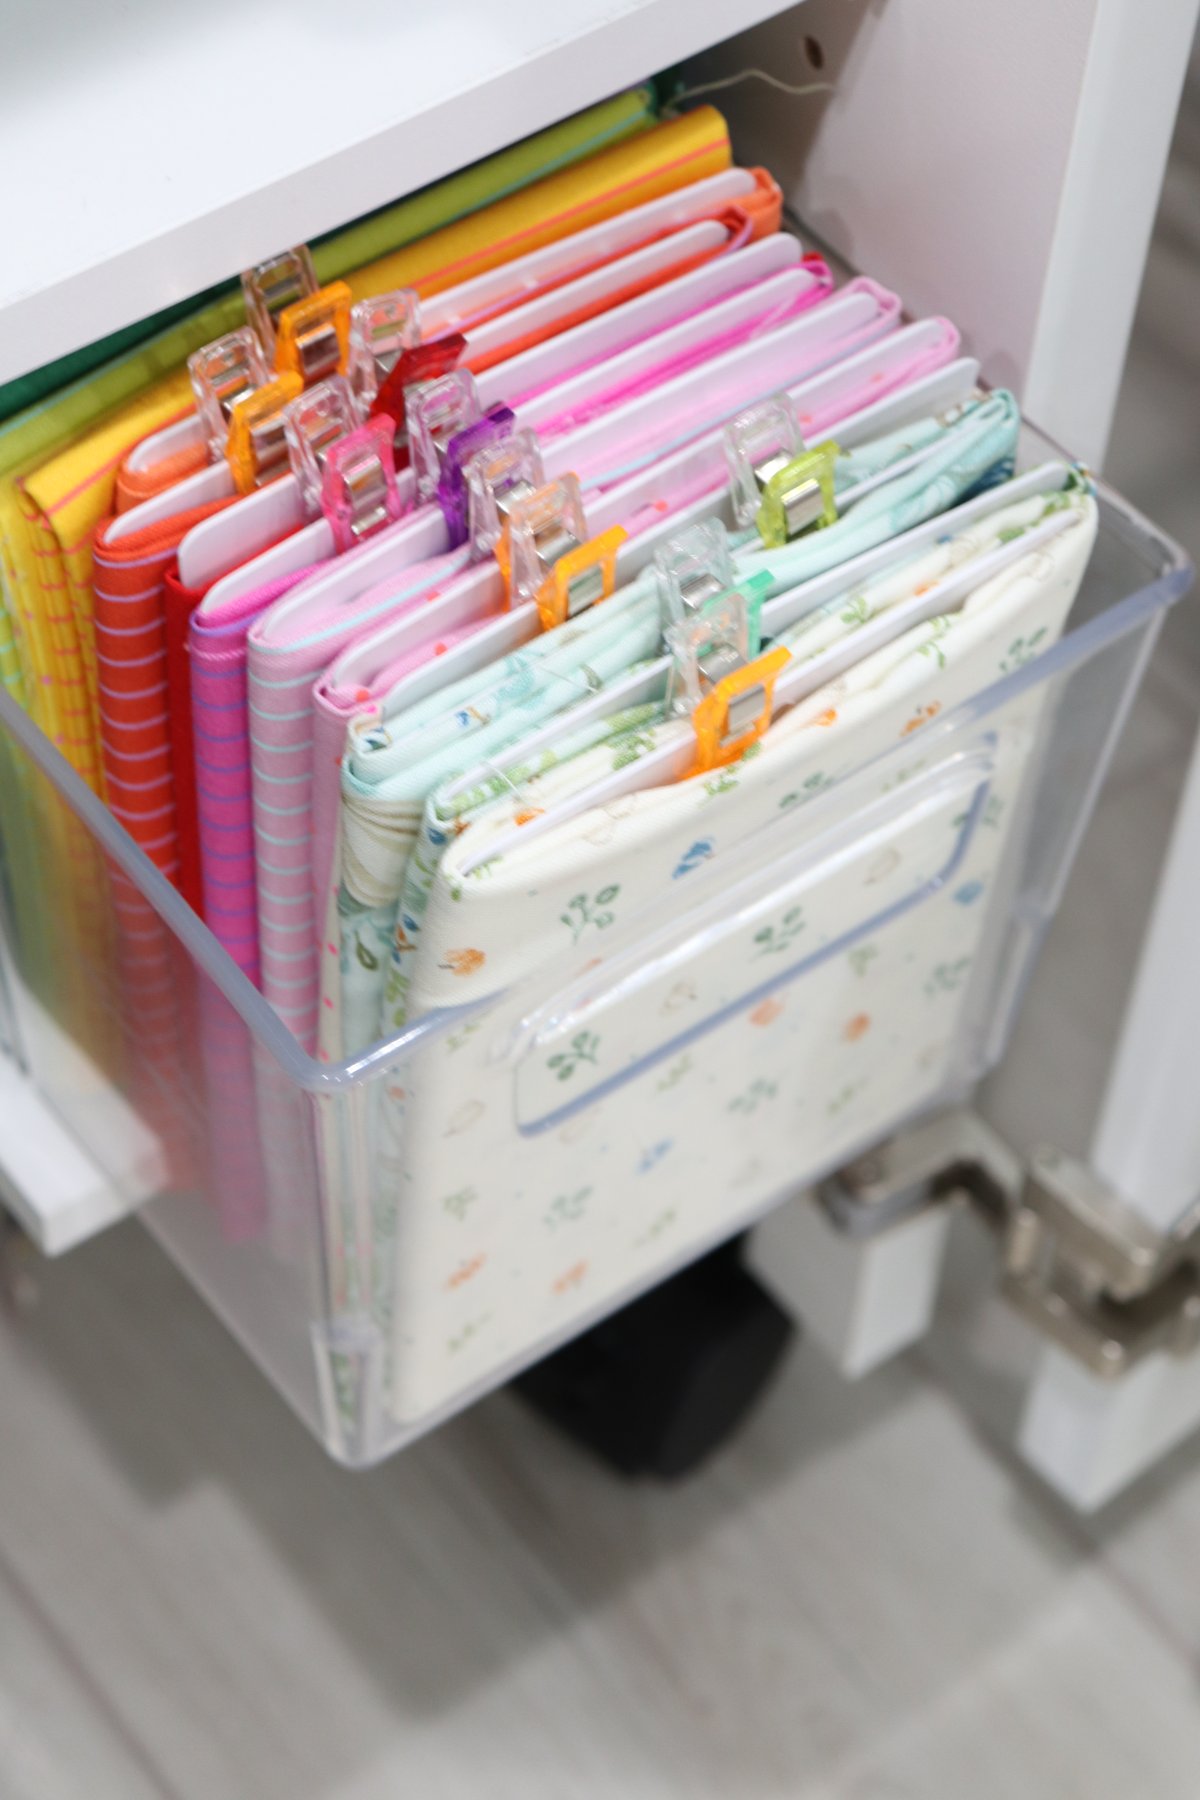 Image contains multicolored fabric fat quarters organized in a clear plastic tote.